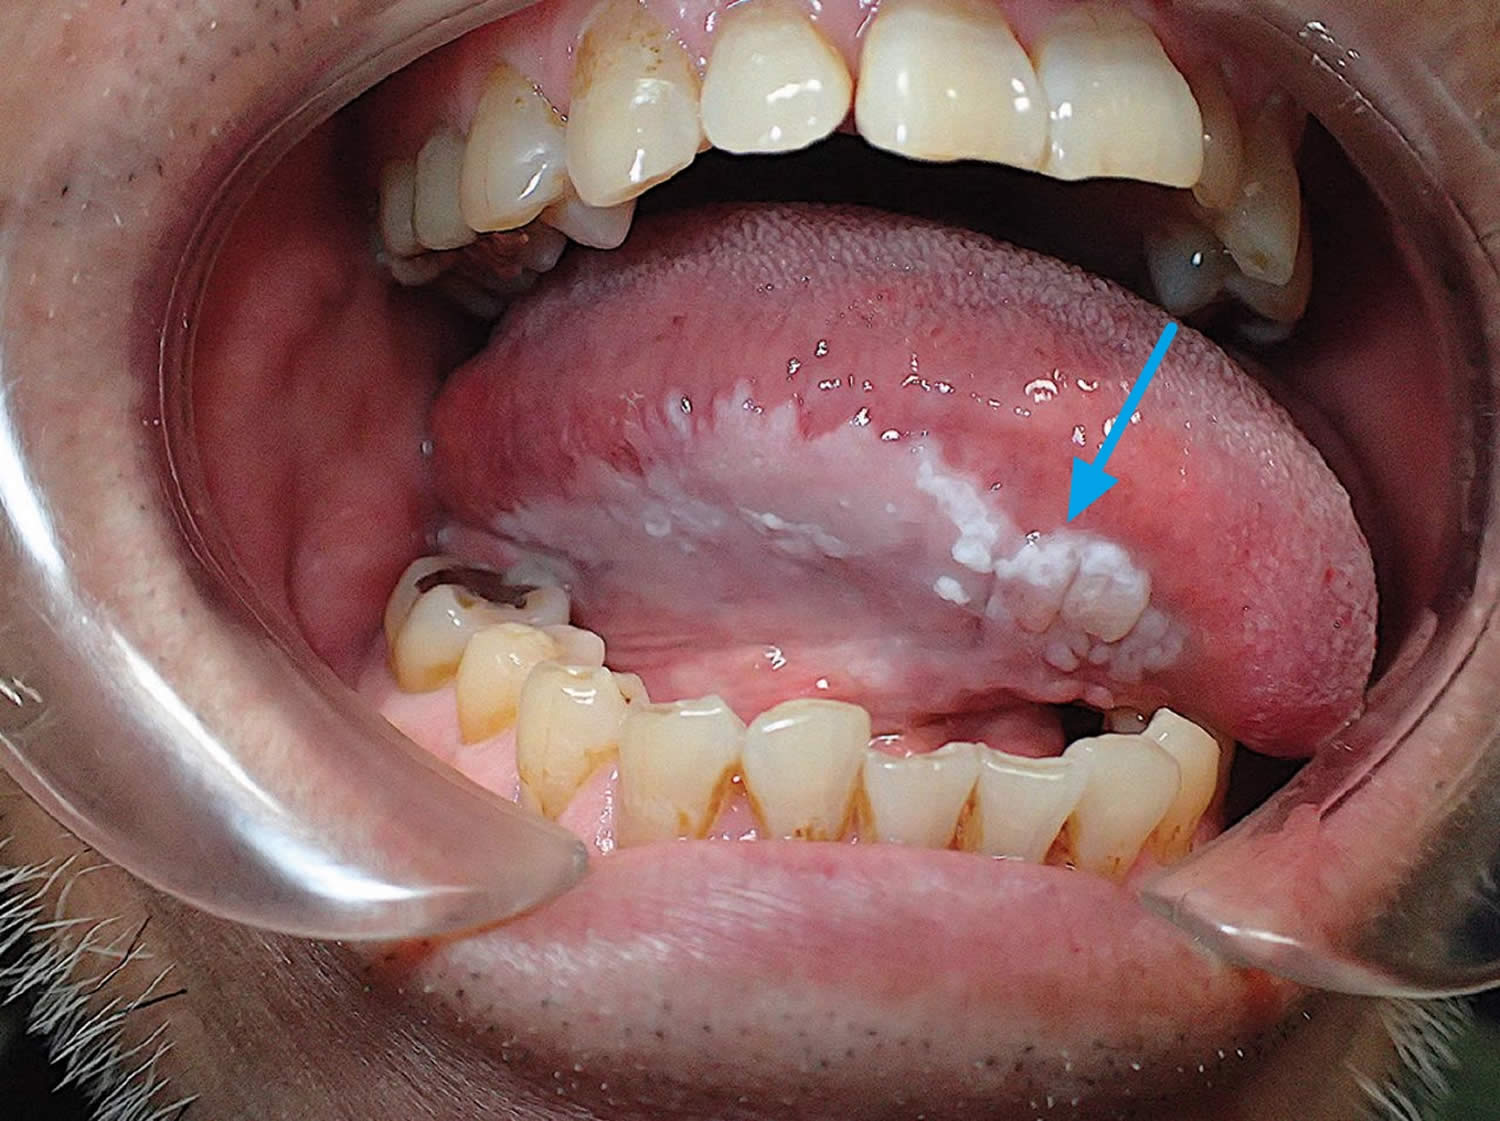 Oral leukoplakia